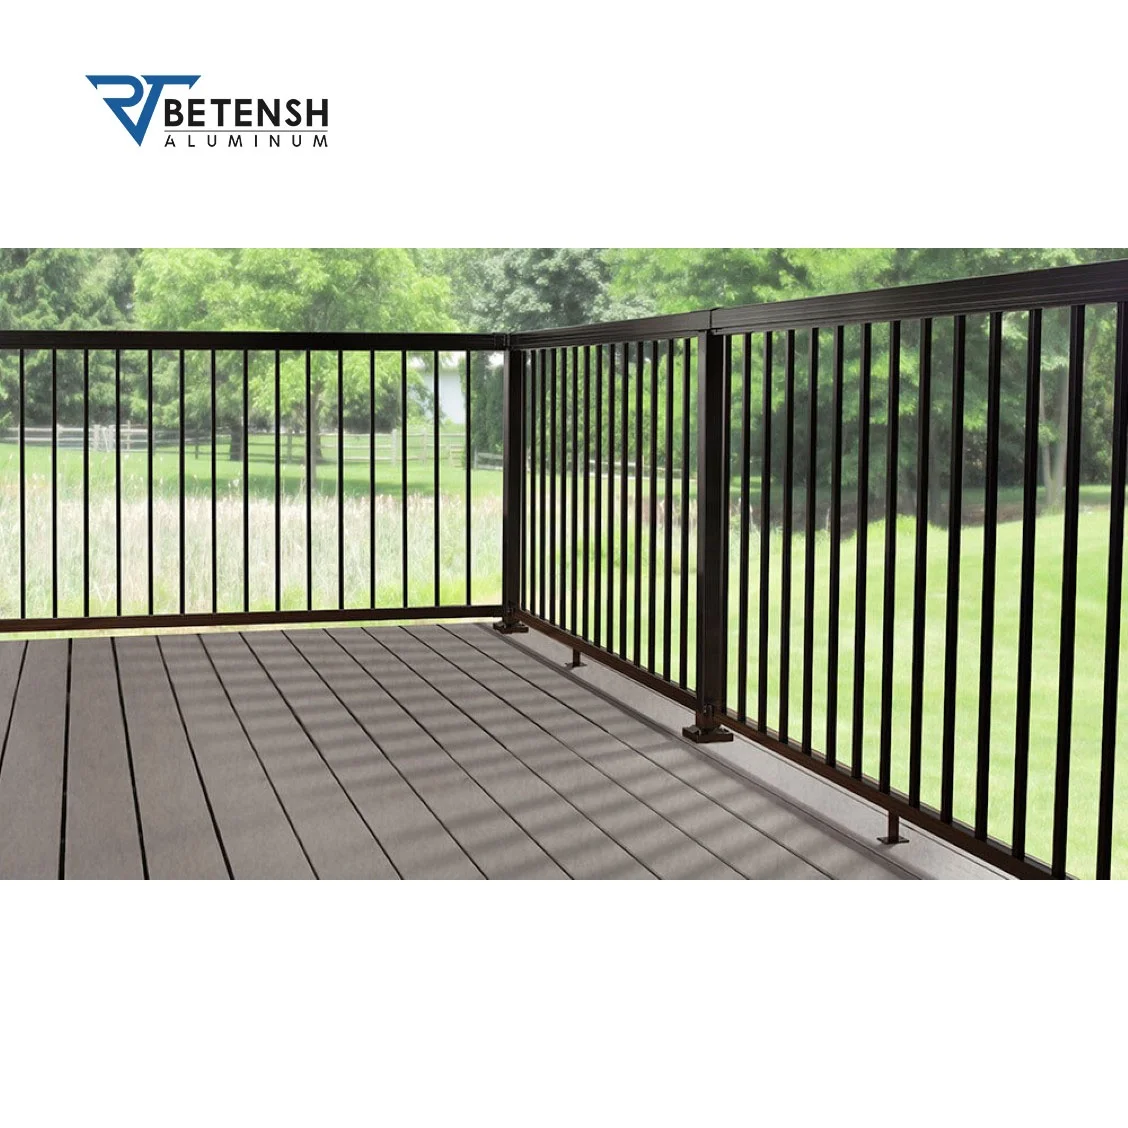 Veranda Composite Decking and Composite Railing